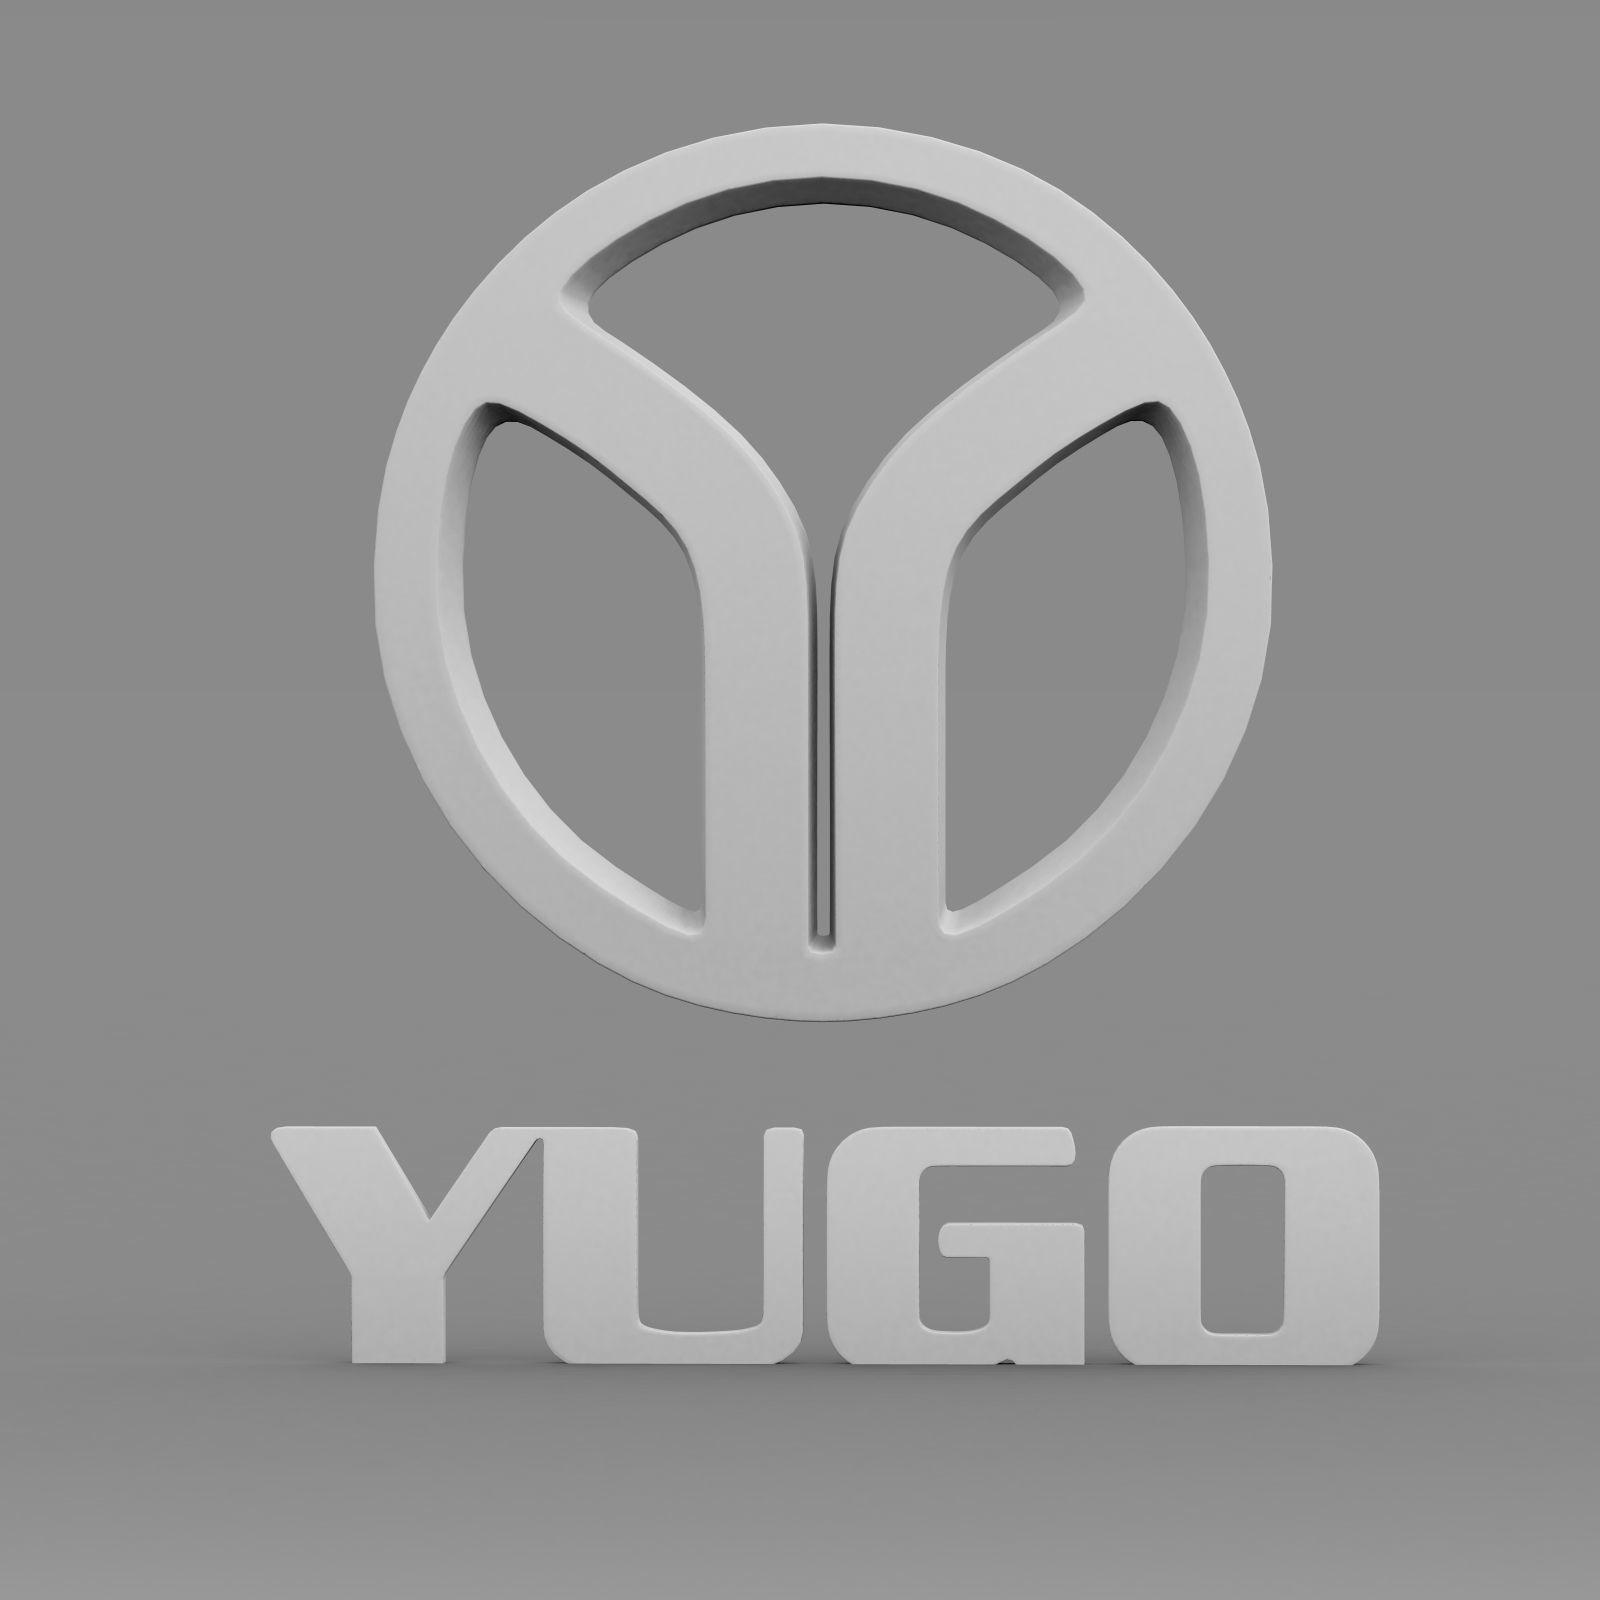 Yugo Logo - yugo logo 3D model | CGTrader